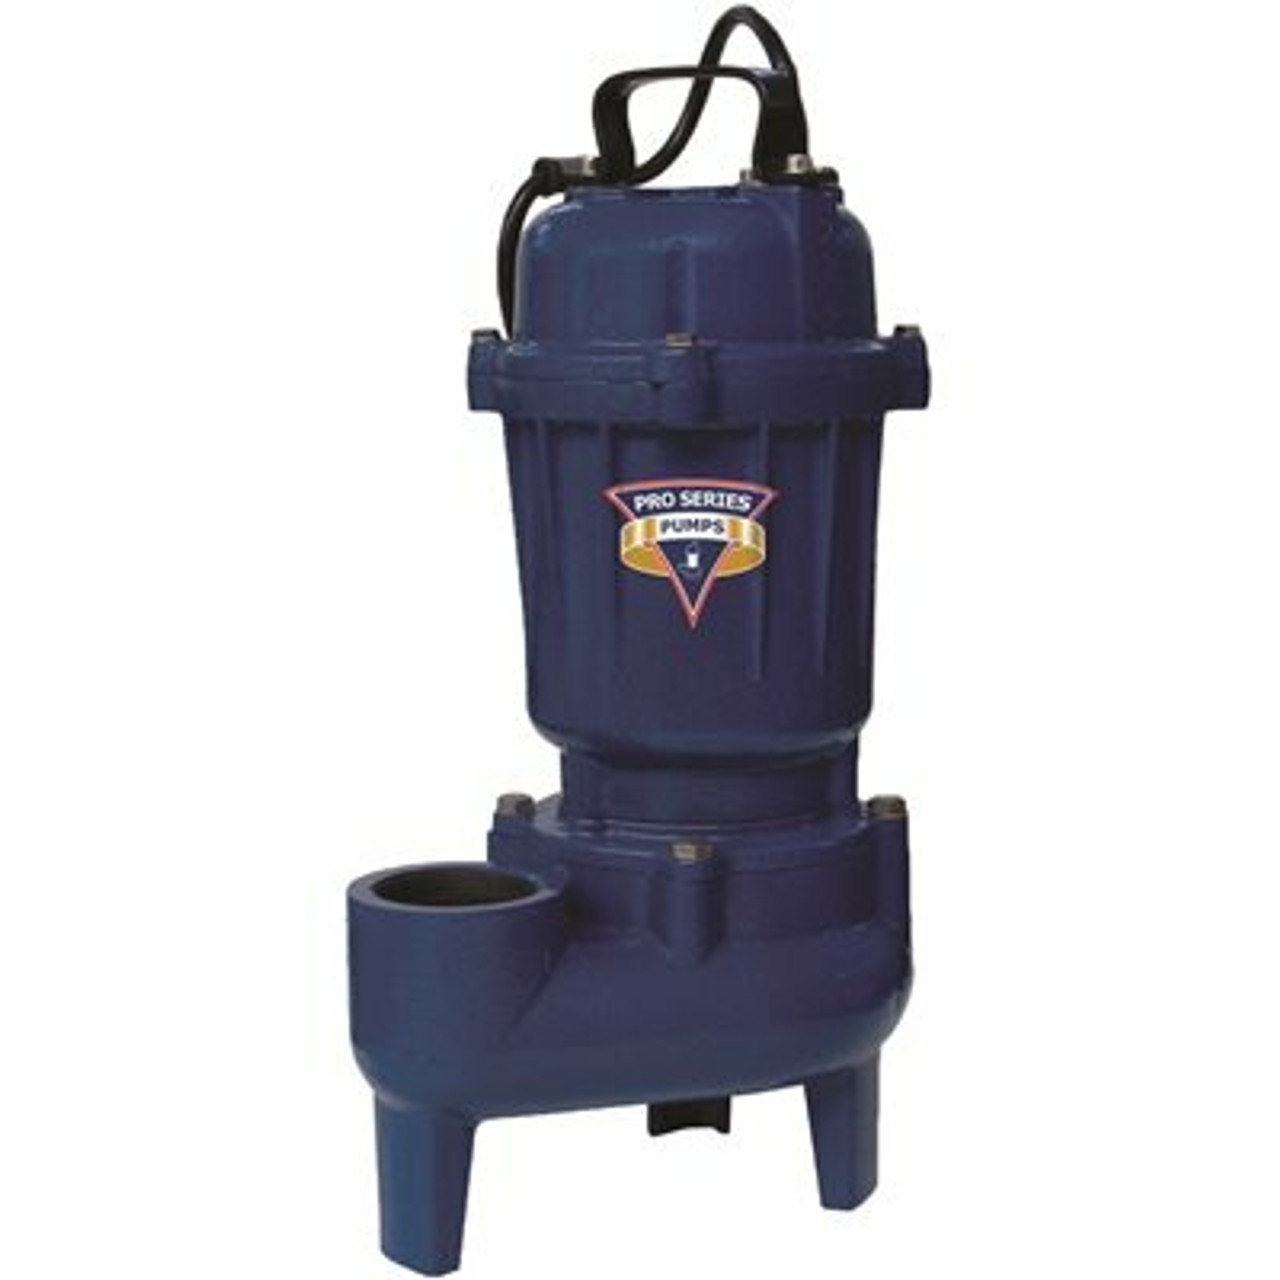 Pro Series Pumps 1/2 Hp Cast Iron Submersible Sewage Pump